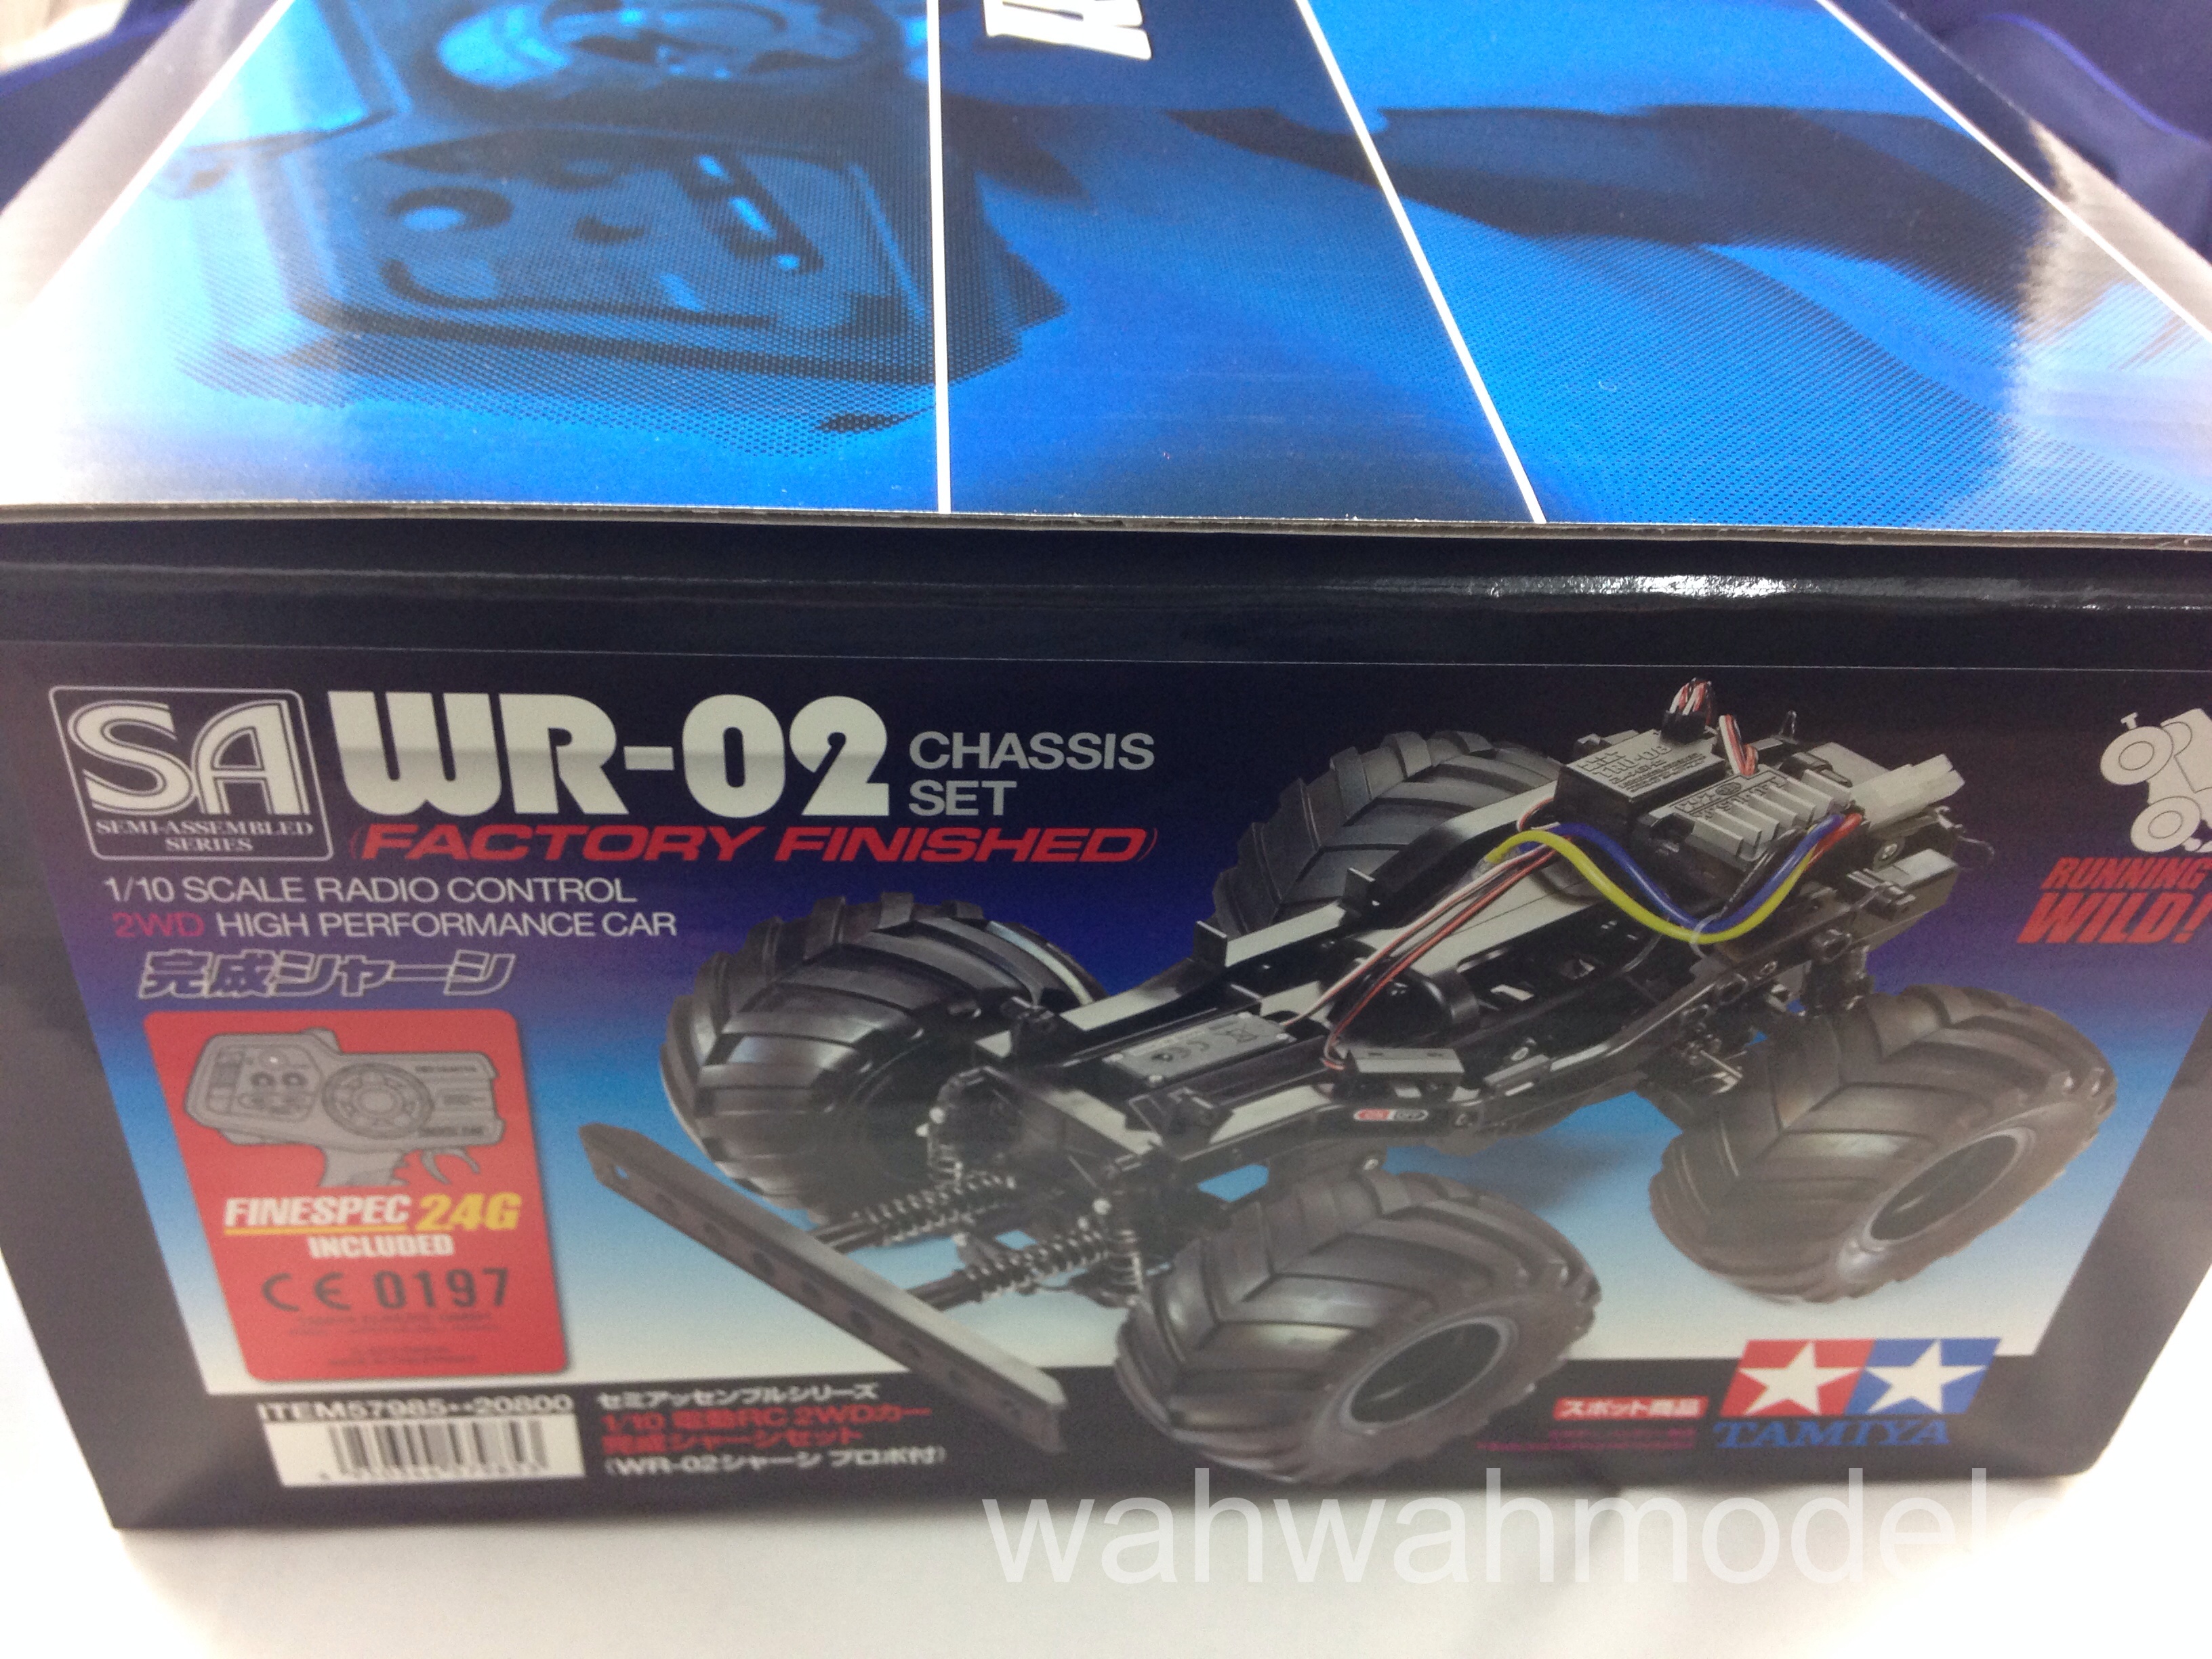 WR-02 - ホビーラジコン